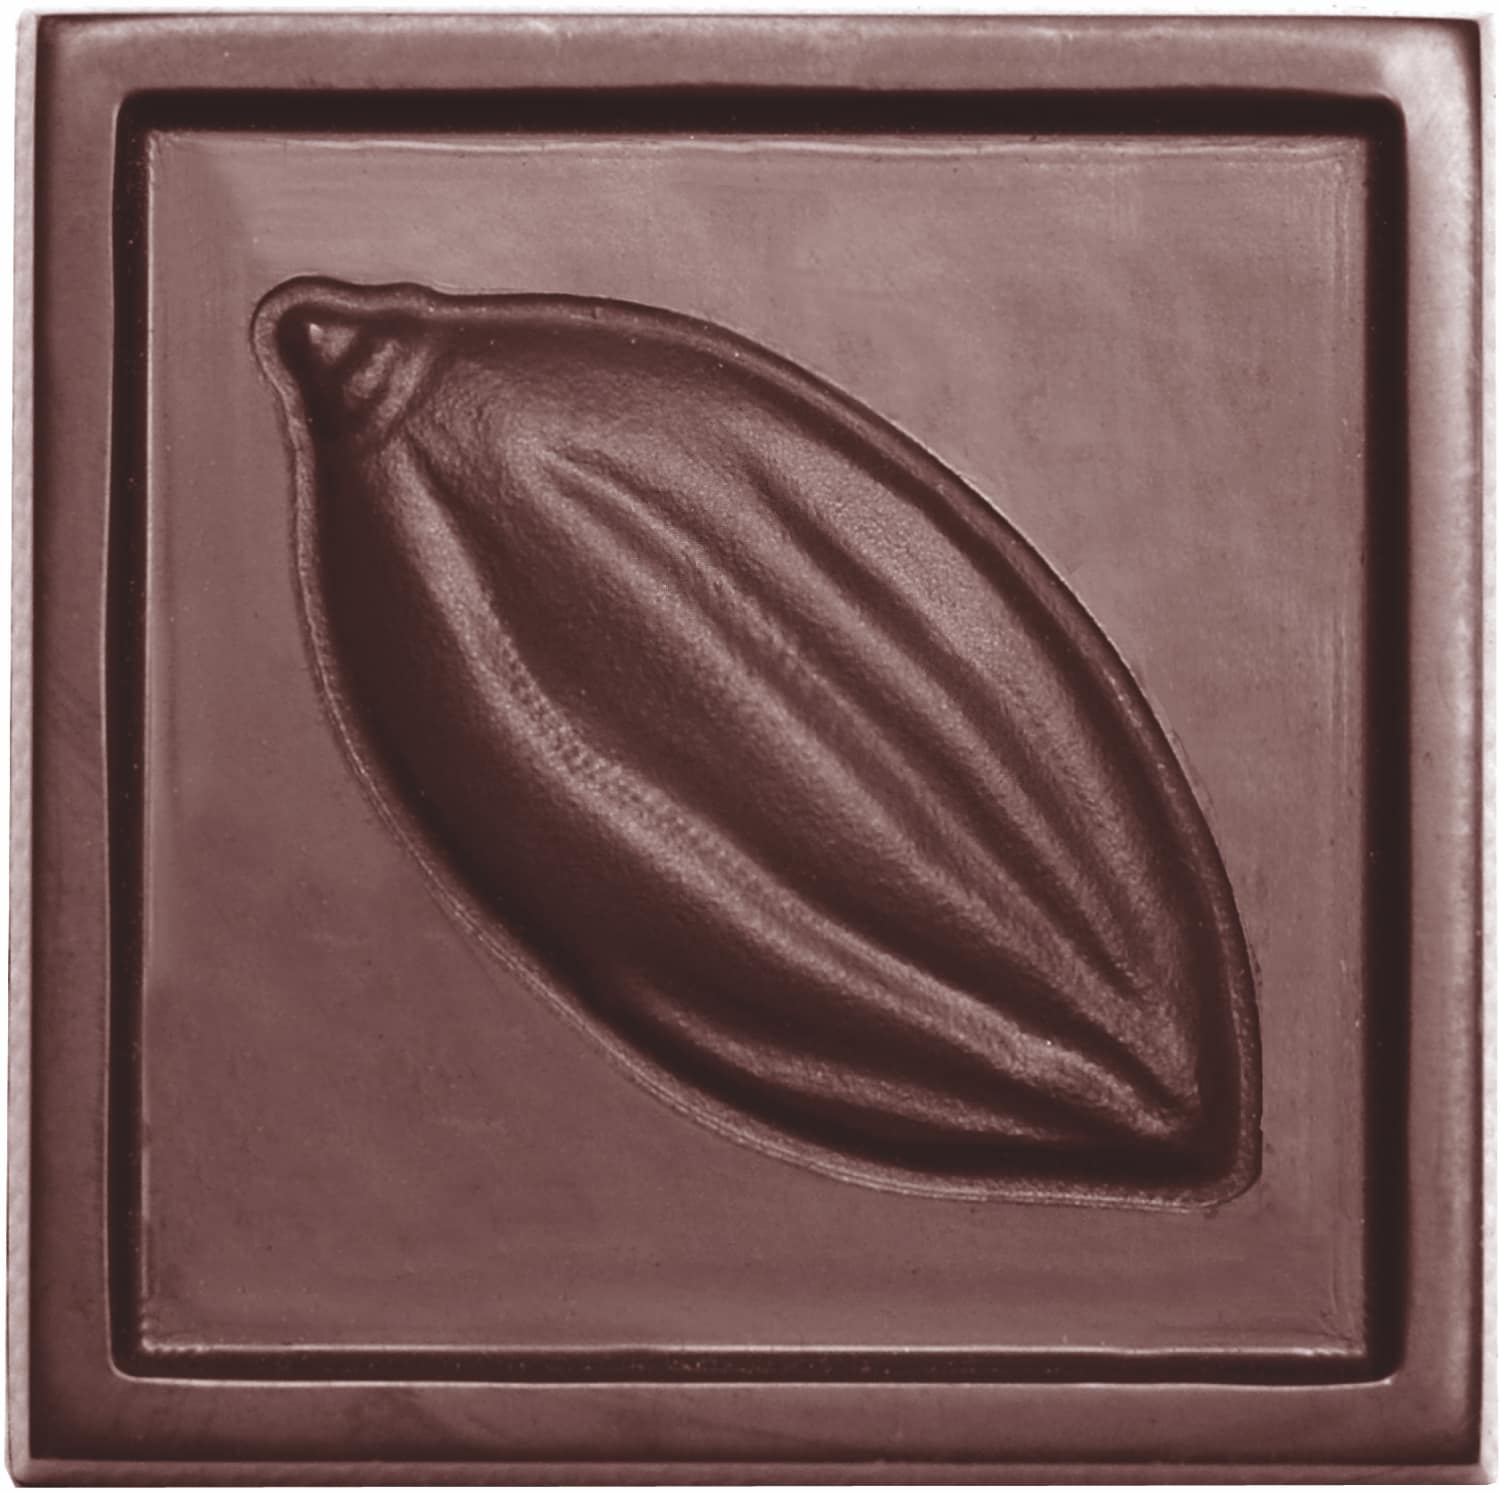 Chocolate mould "Cocoa bean" 421540